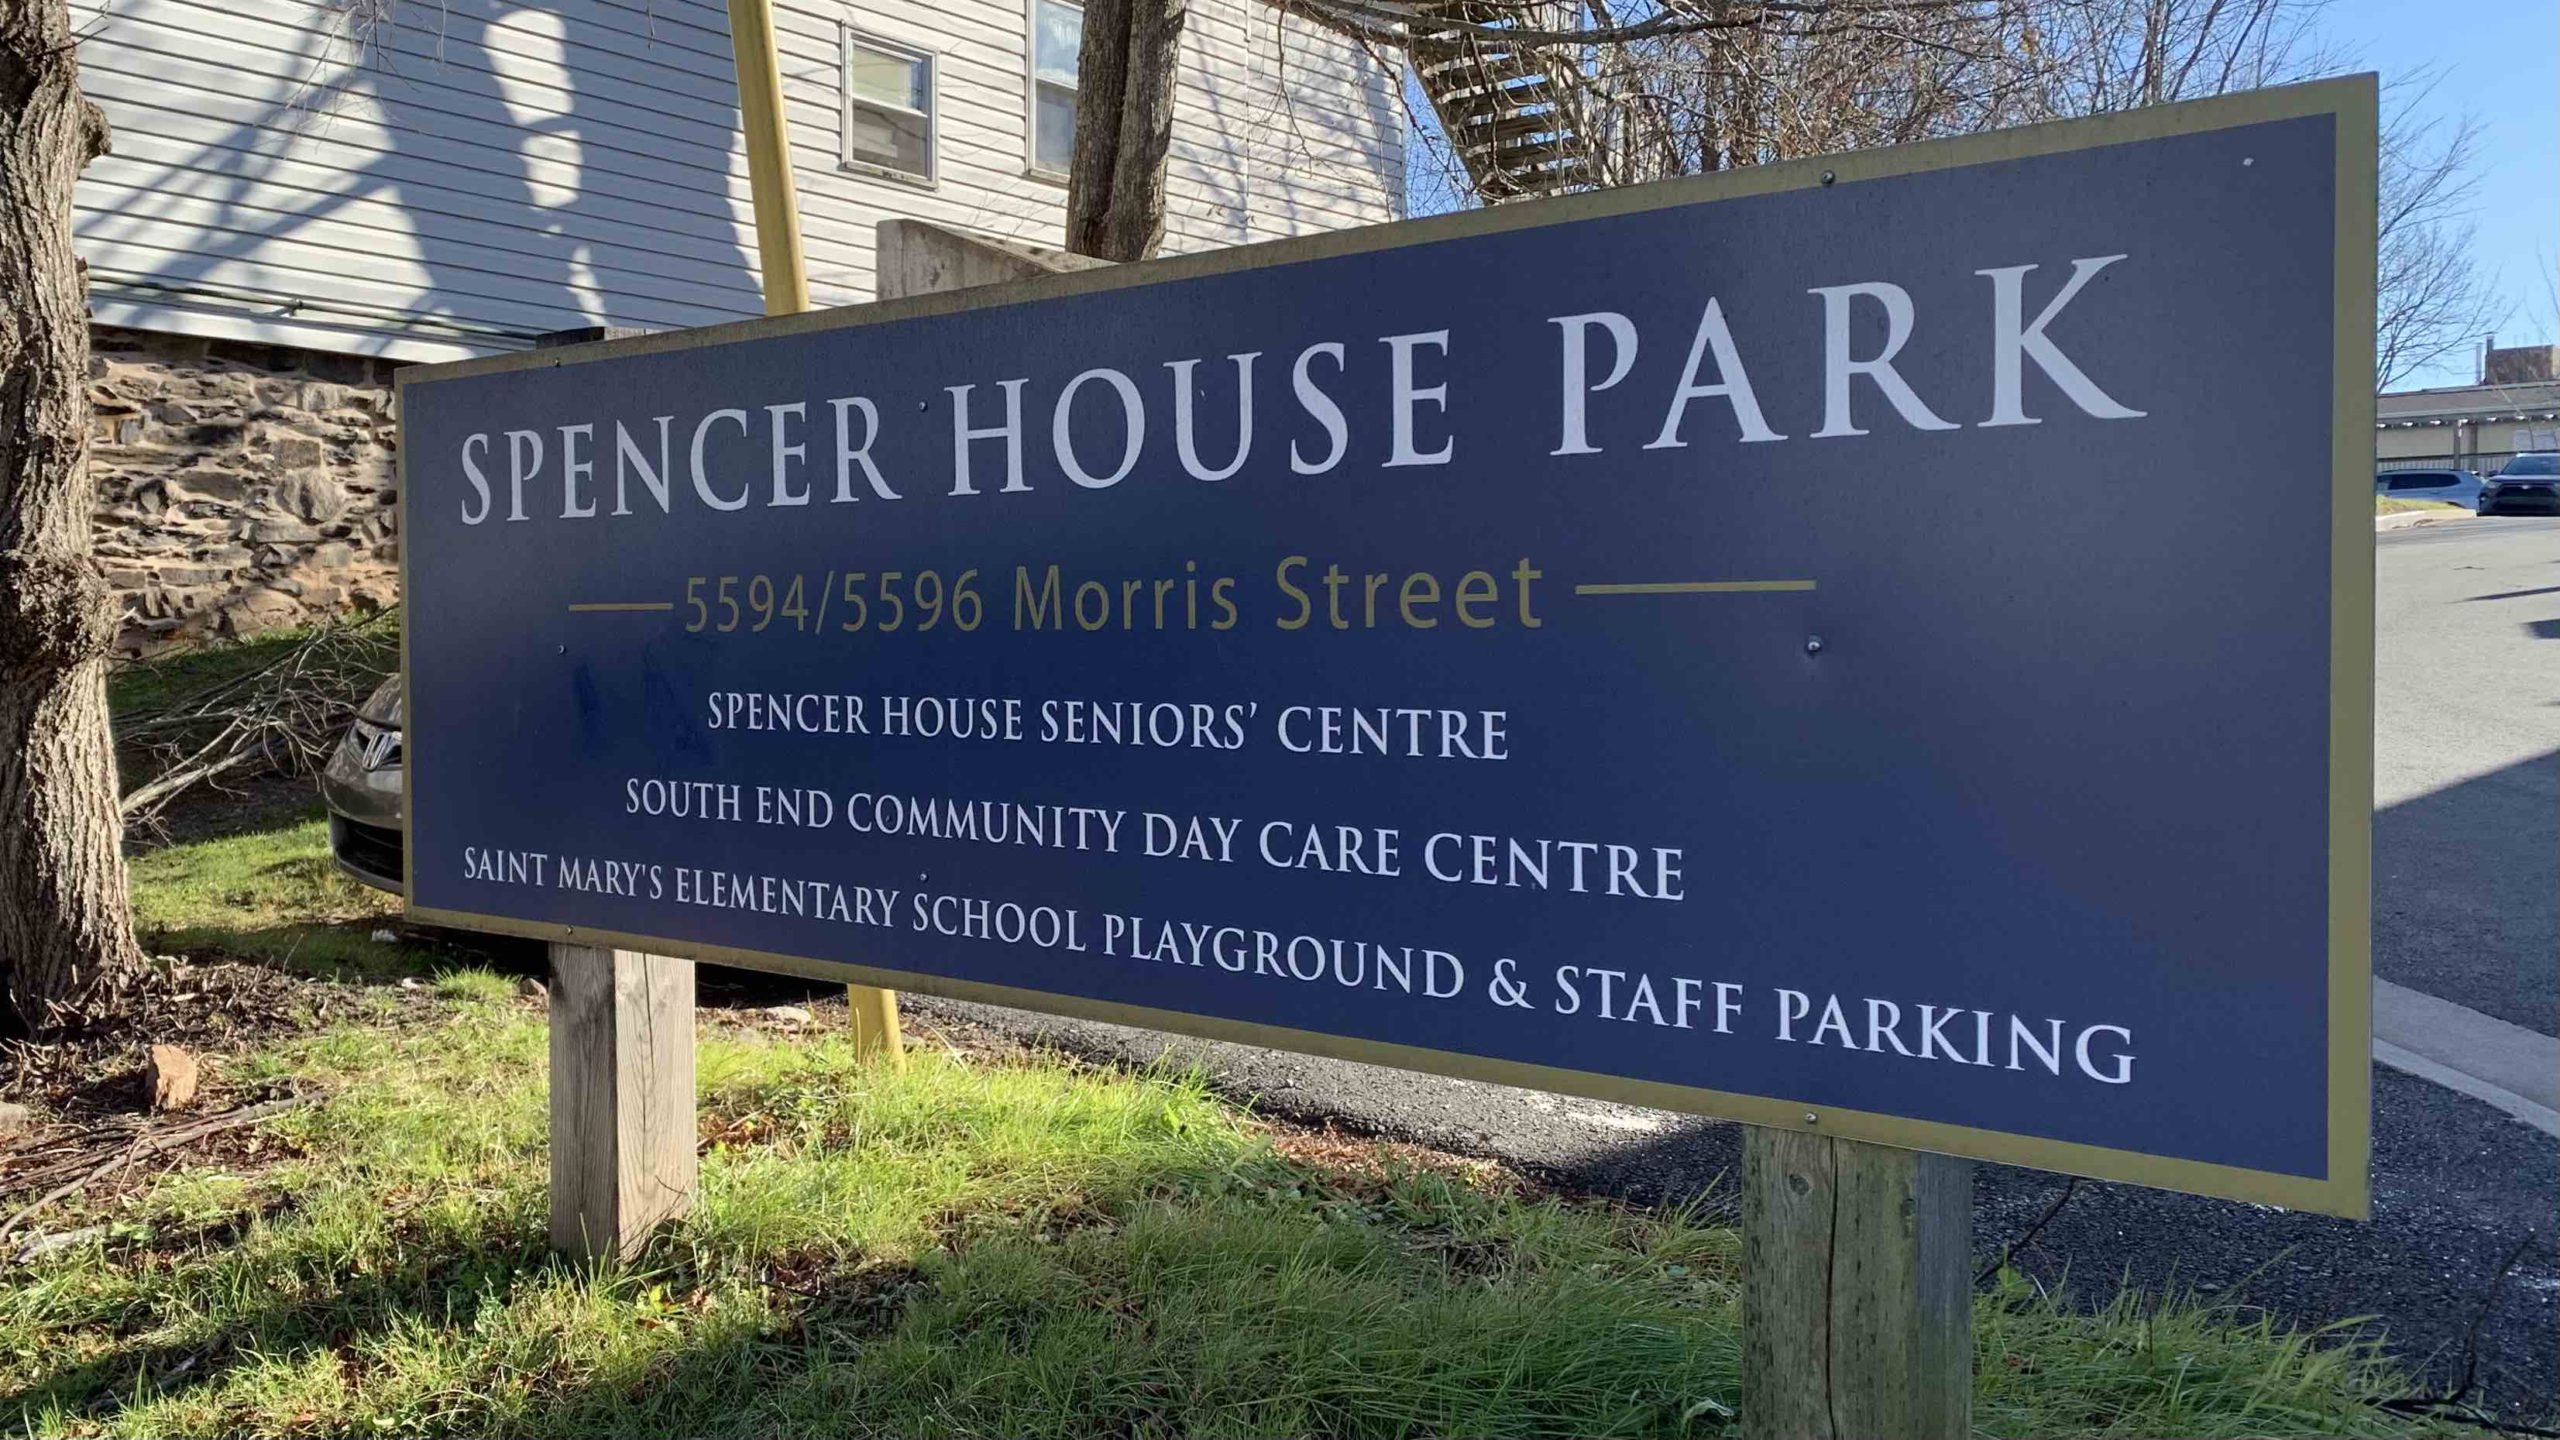 A sign for Spencer House Park